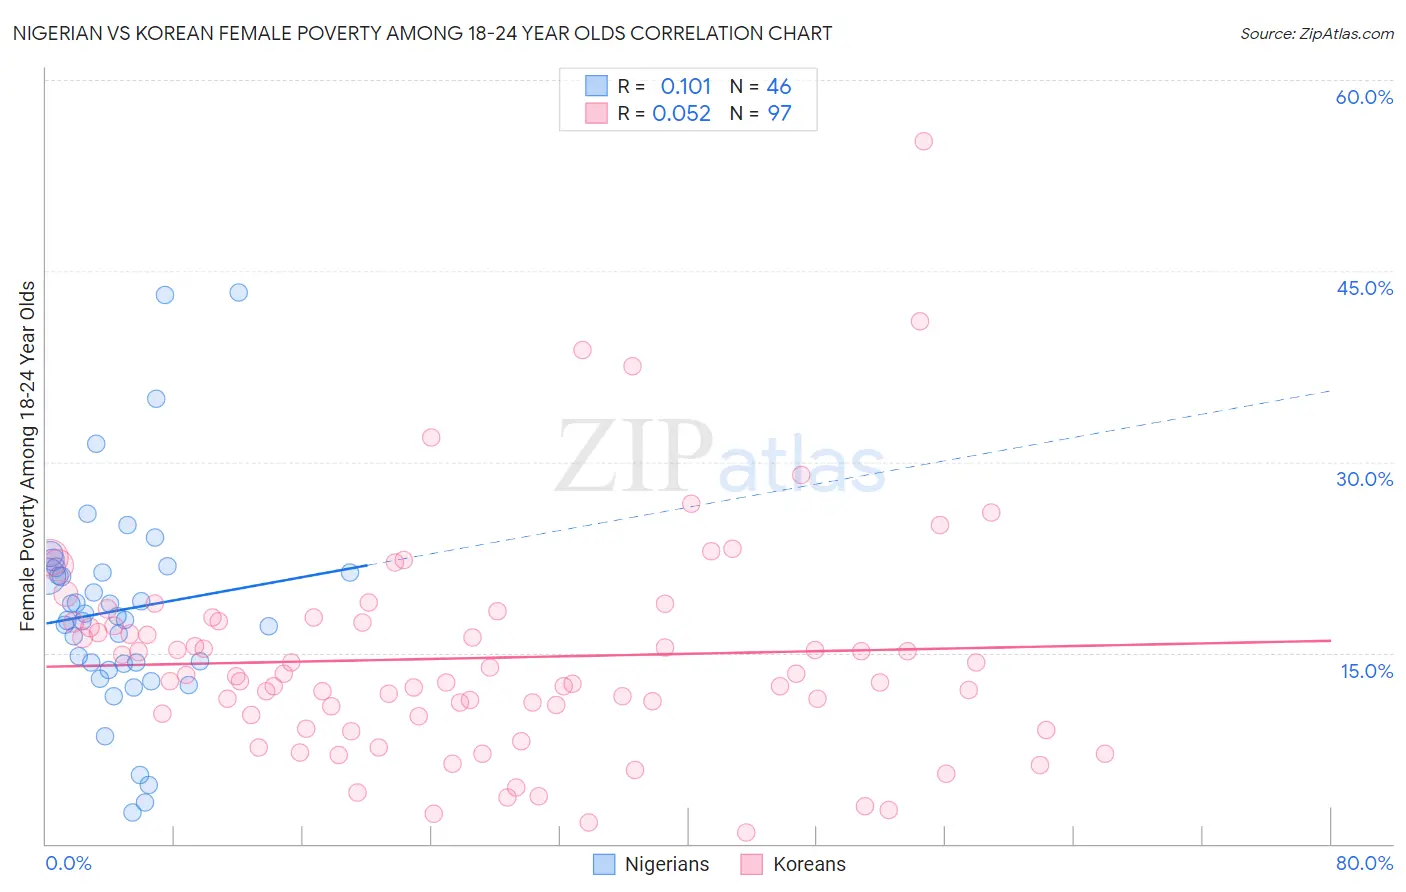 Nigerian vs Korean Female Poverty Among 18-24 Year Olds